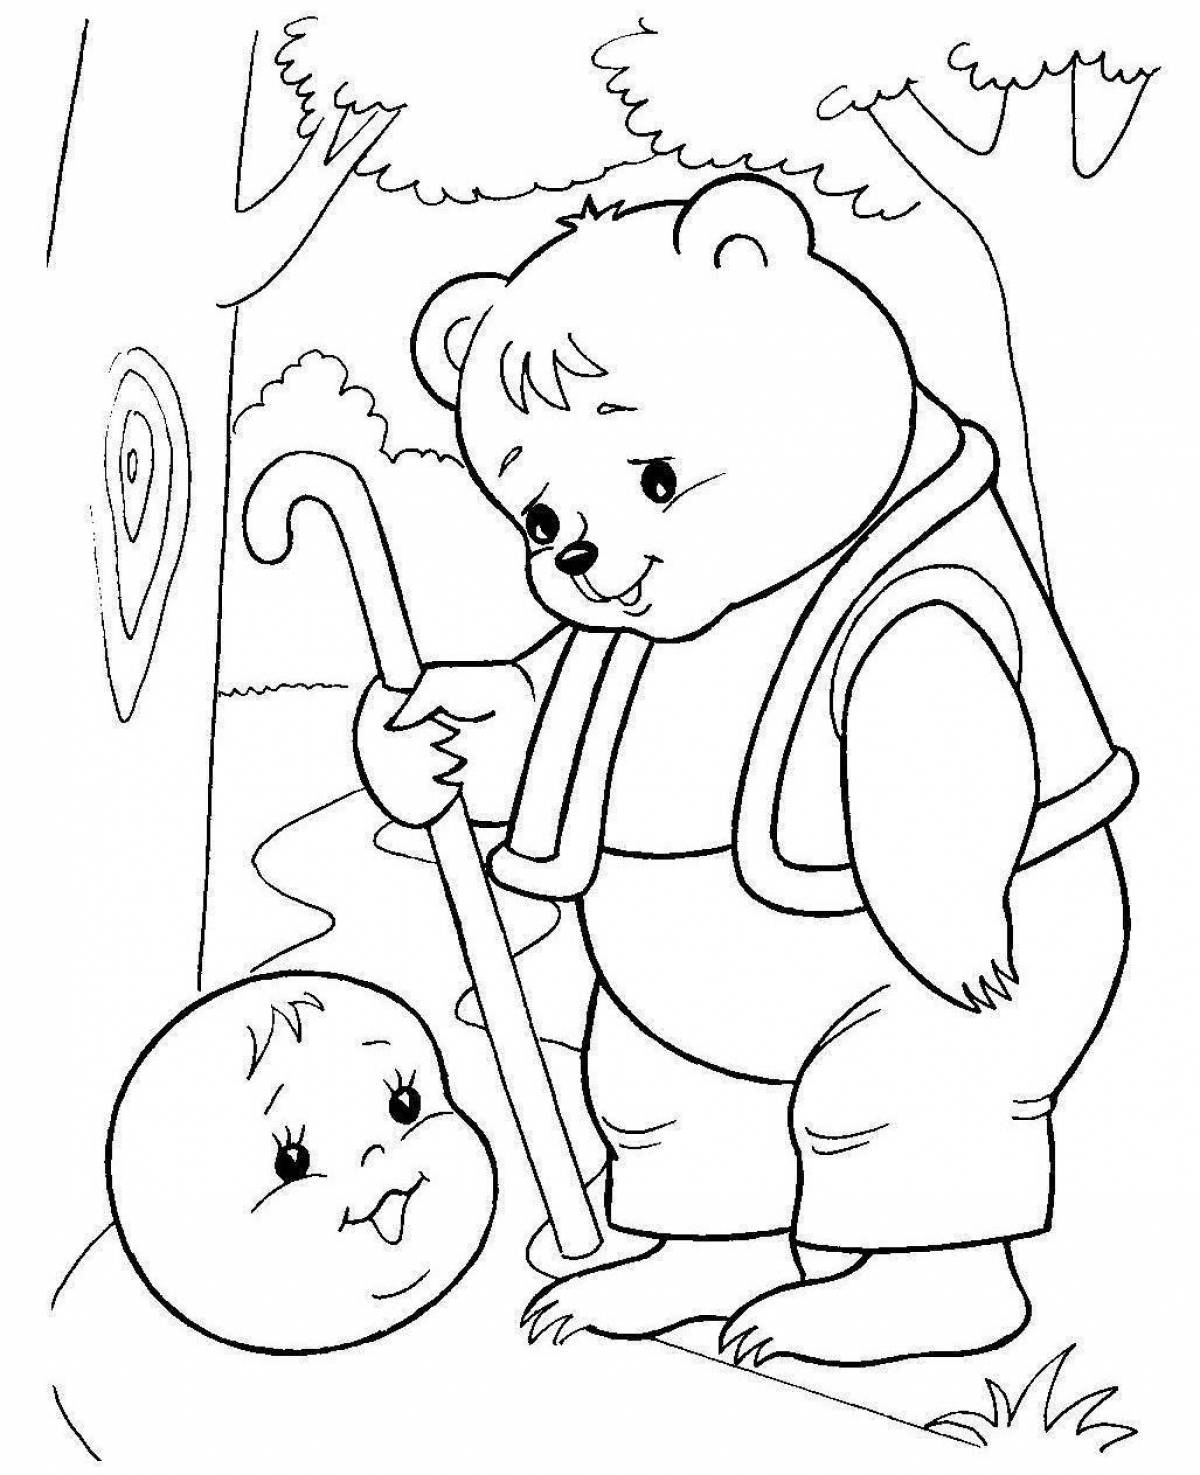 Fun coloring kolobok for children 2-3 years old